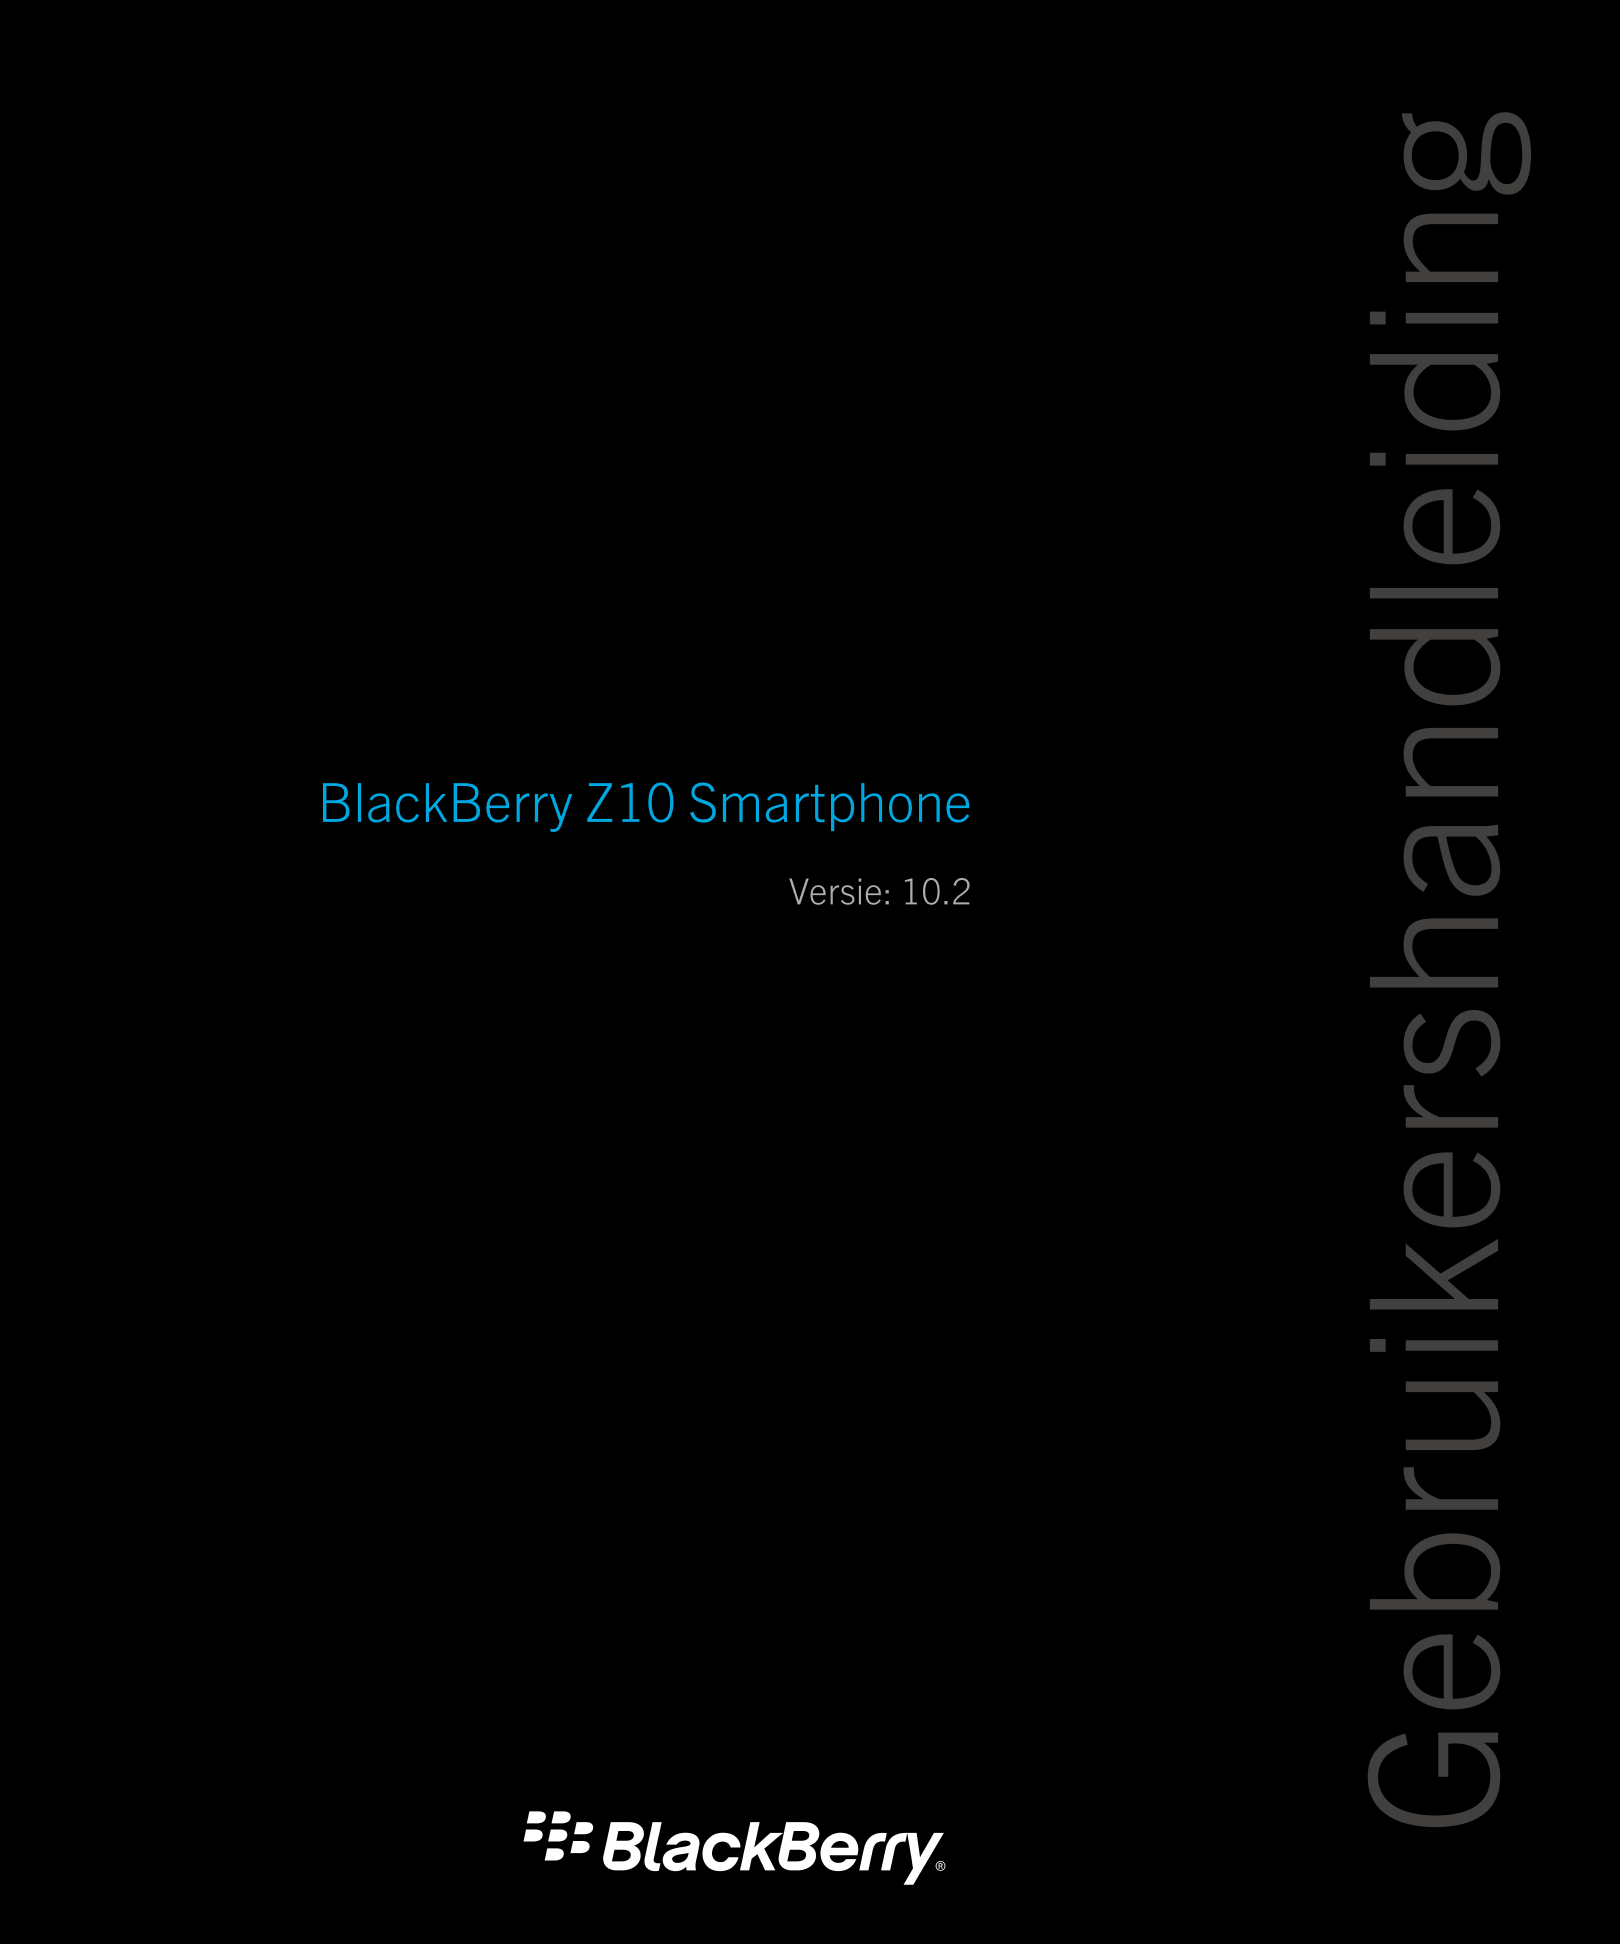 Gebruikershandleiding
BlackBerry Z10 Smartphone
Versie: 10.2